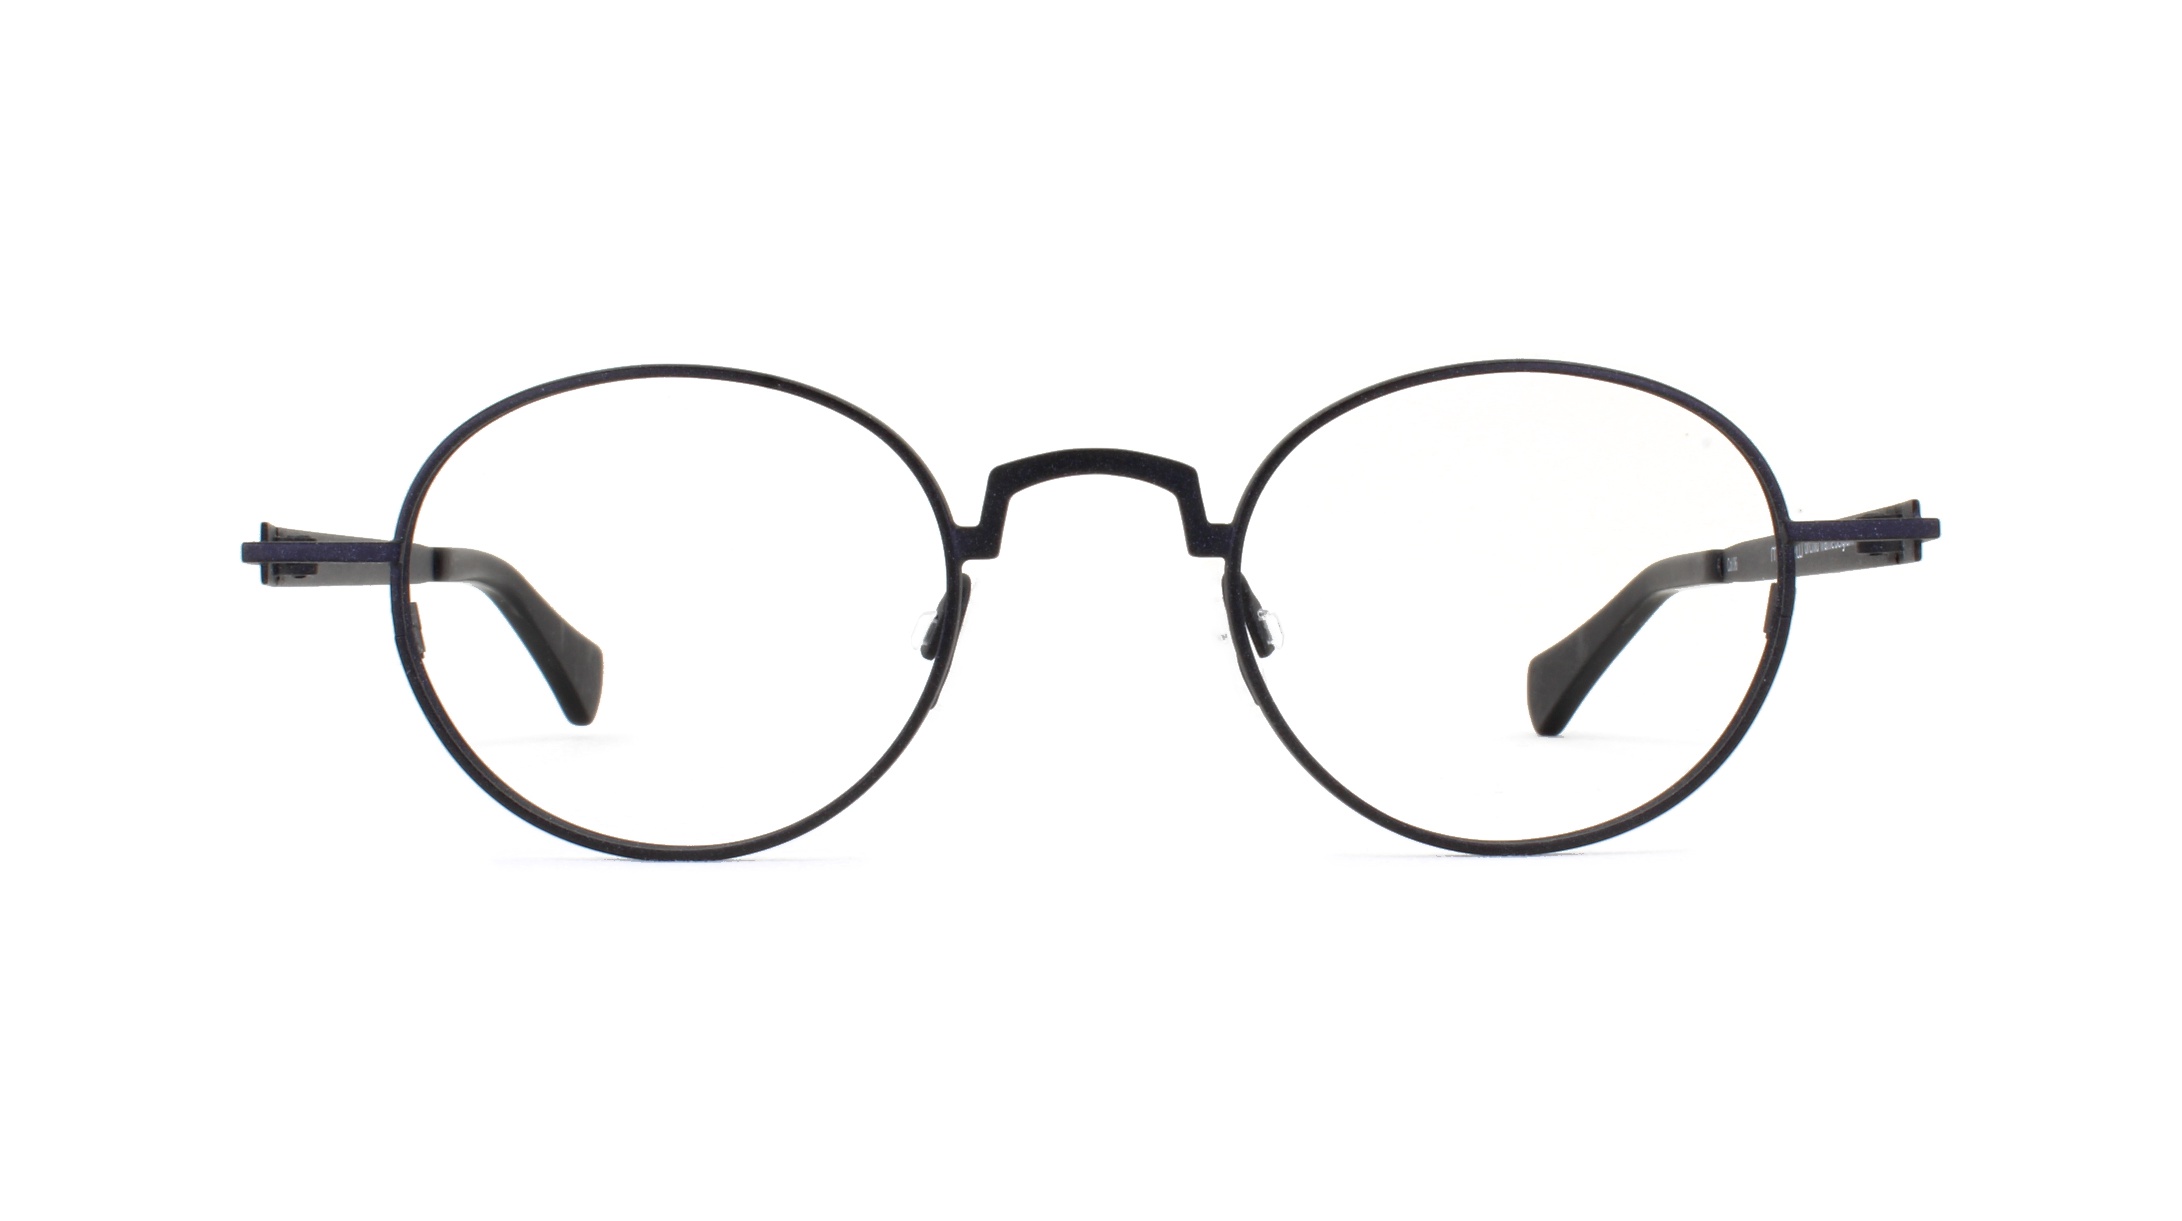 Glasses Matttew-eyewear Orchid, black colour - Doyle